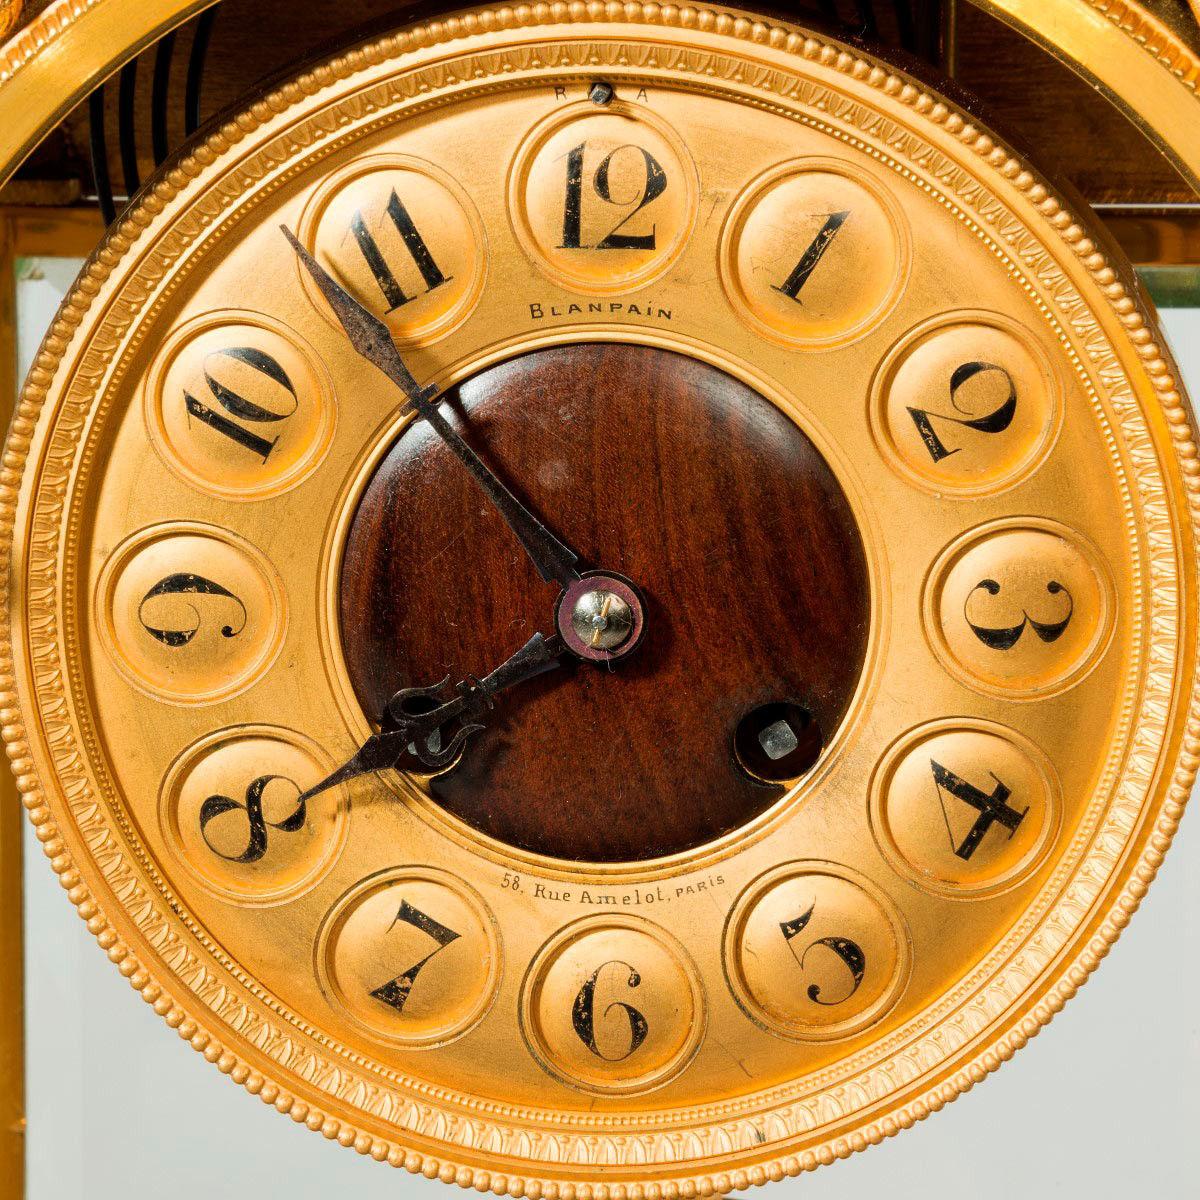 An unusual and superb quality rectangular four glass ormolu mantel clock